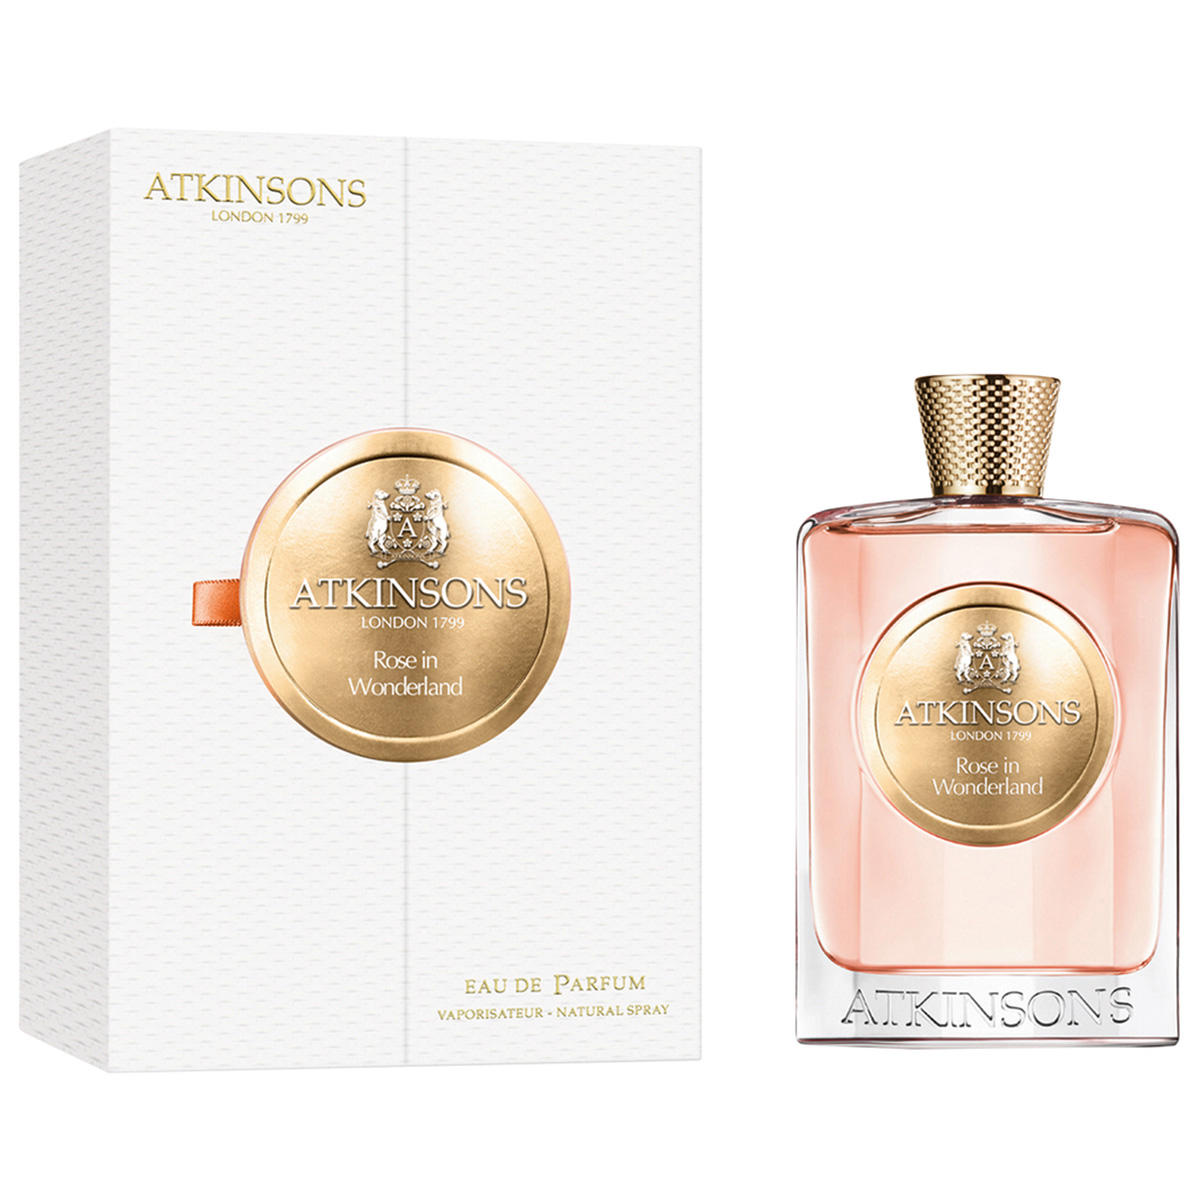 ATKINSONS Rose in Wonderland Eau de Parfum 100 ml - 2